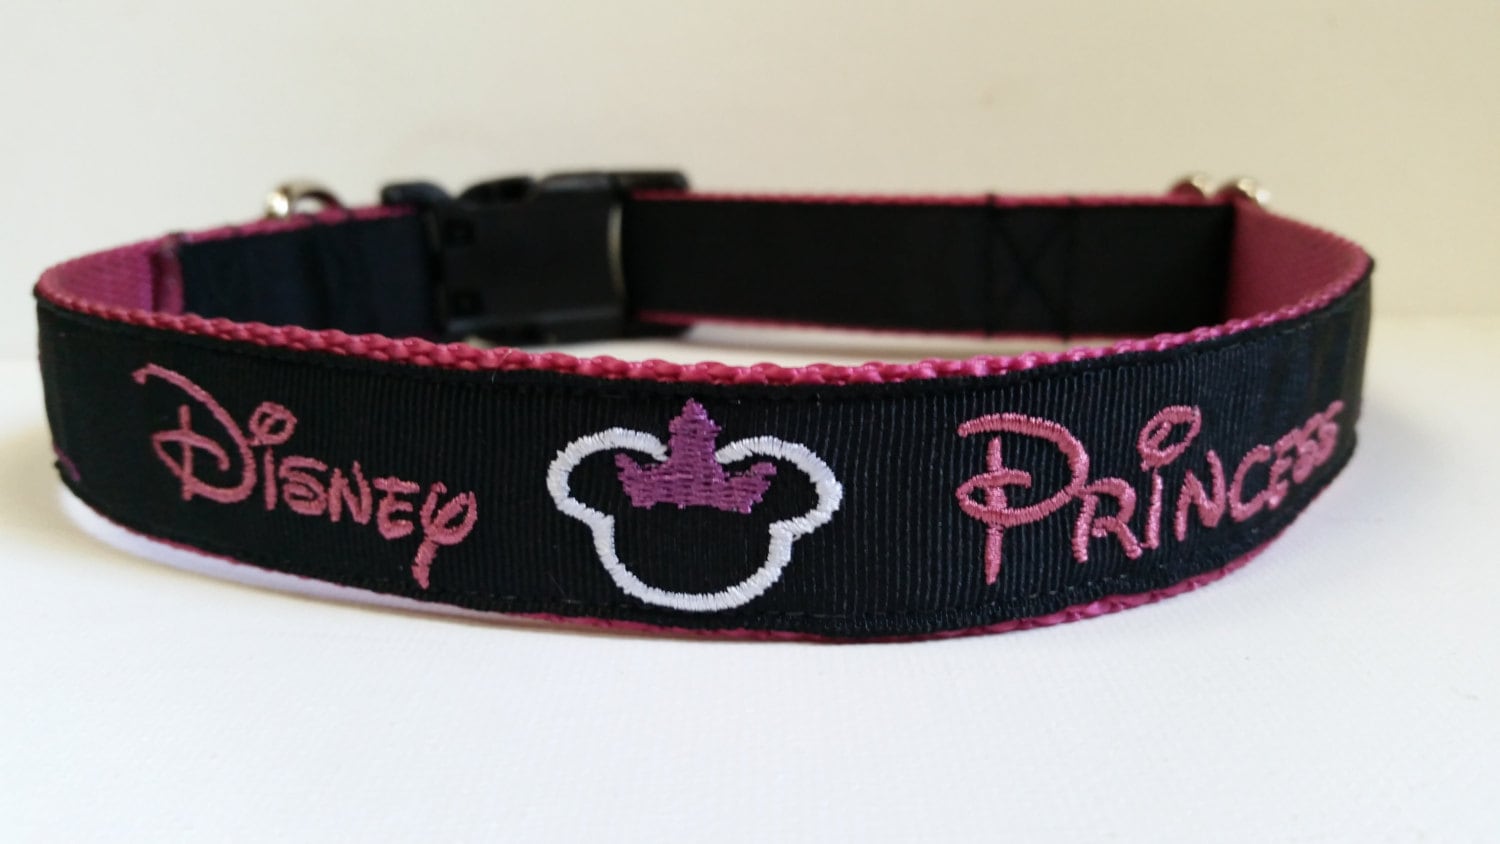 Disney Princess Embroidered Dog Collar